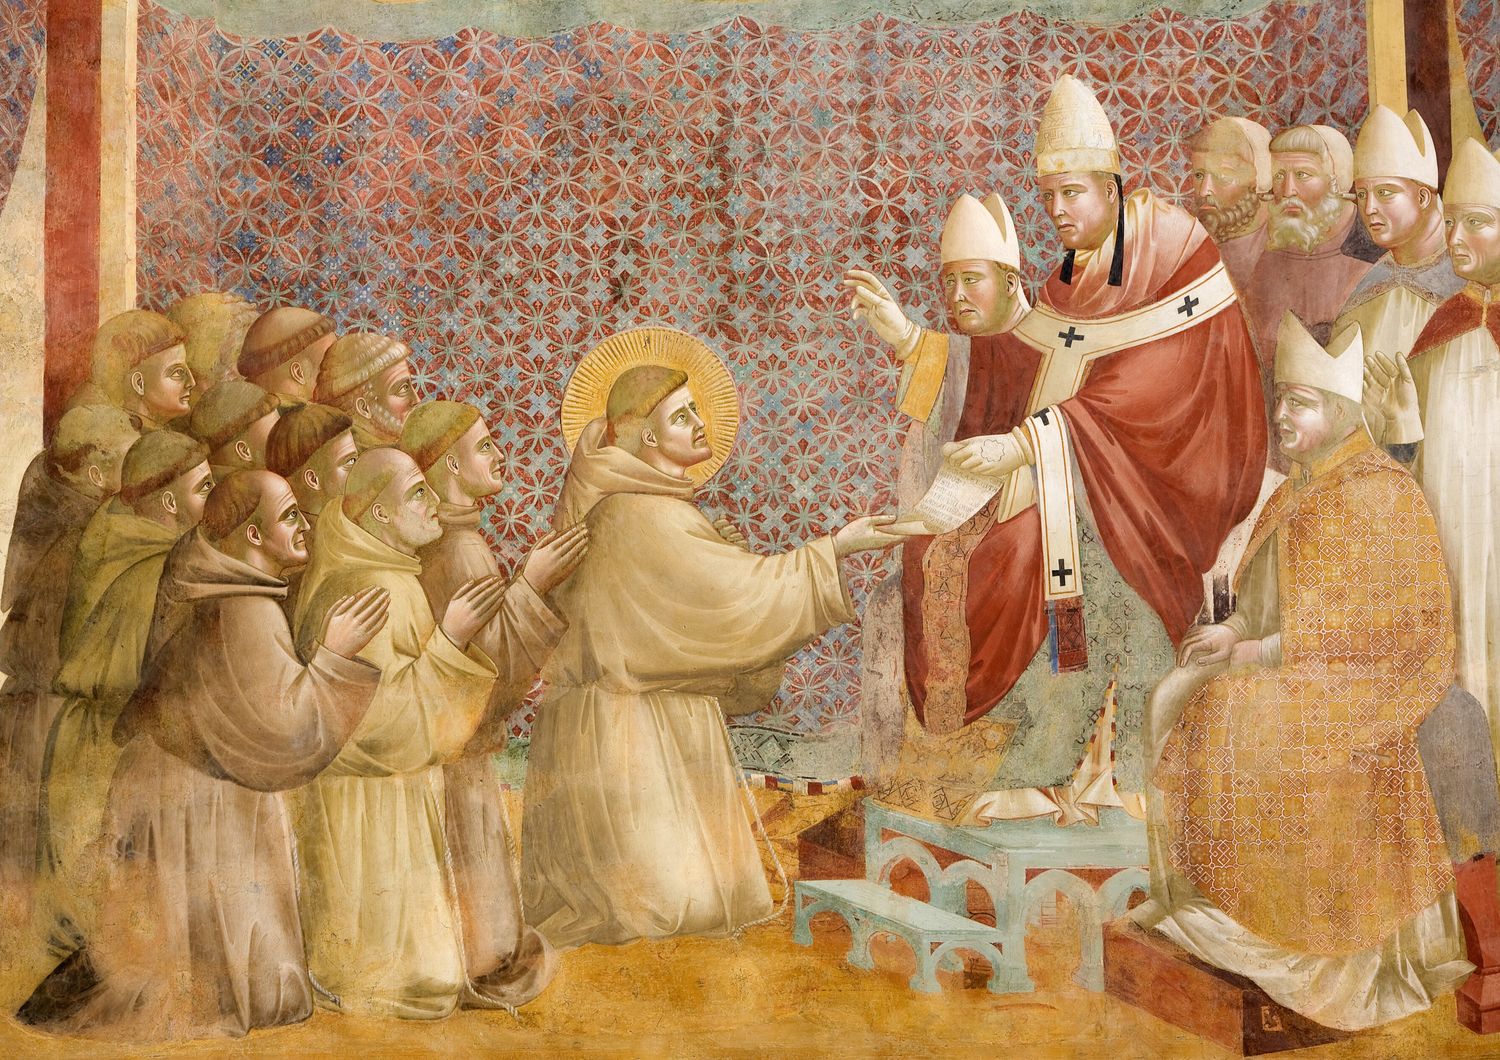 Un dipinto raffigurante San Francesco nella basilica di Assisi dedicata al santo